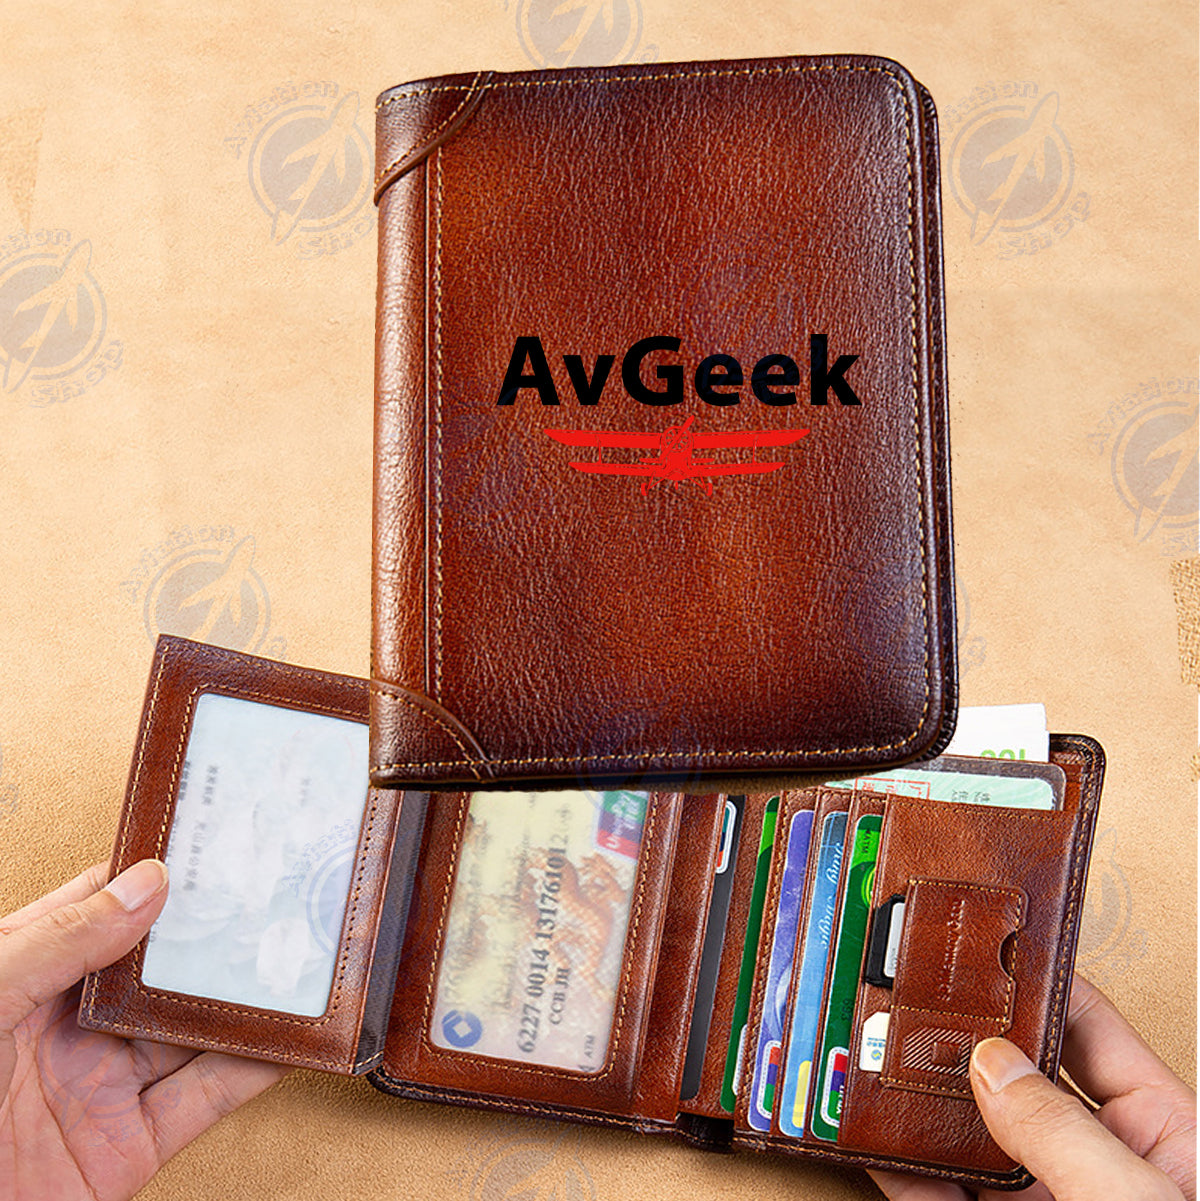 Avgeek Designed Leather Wallets